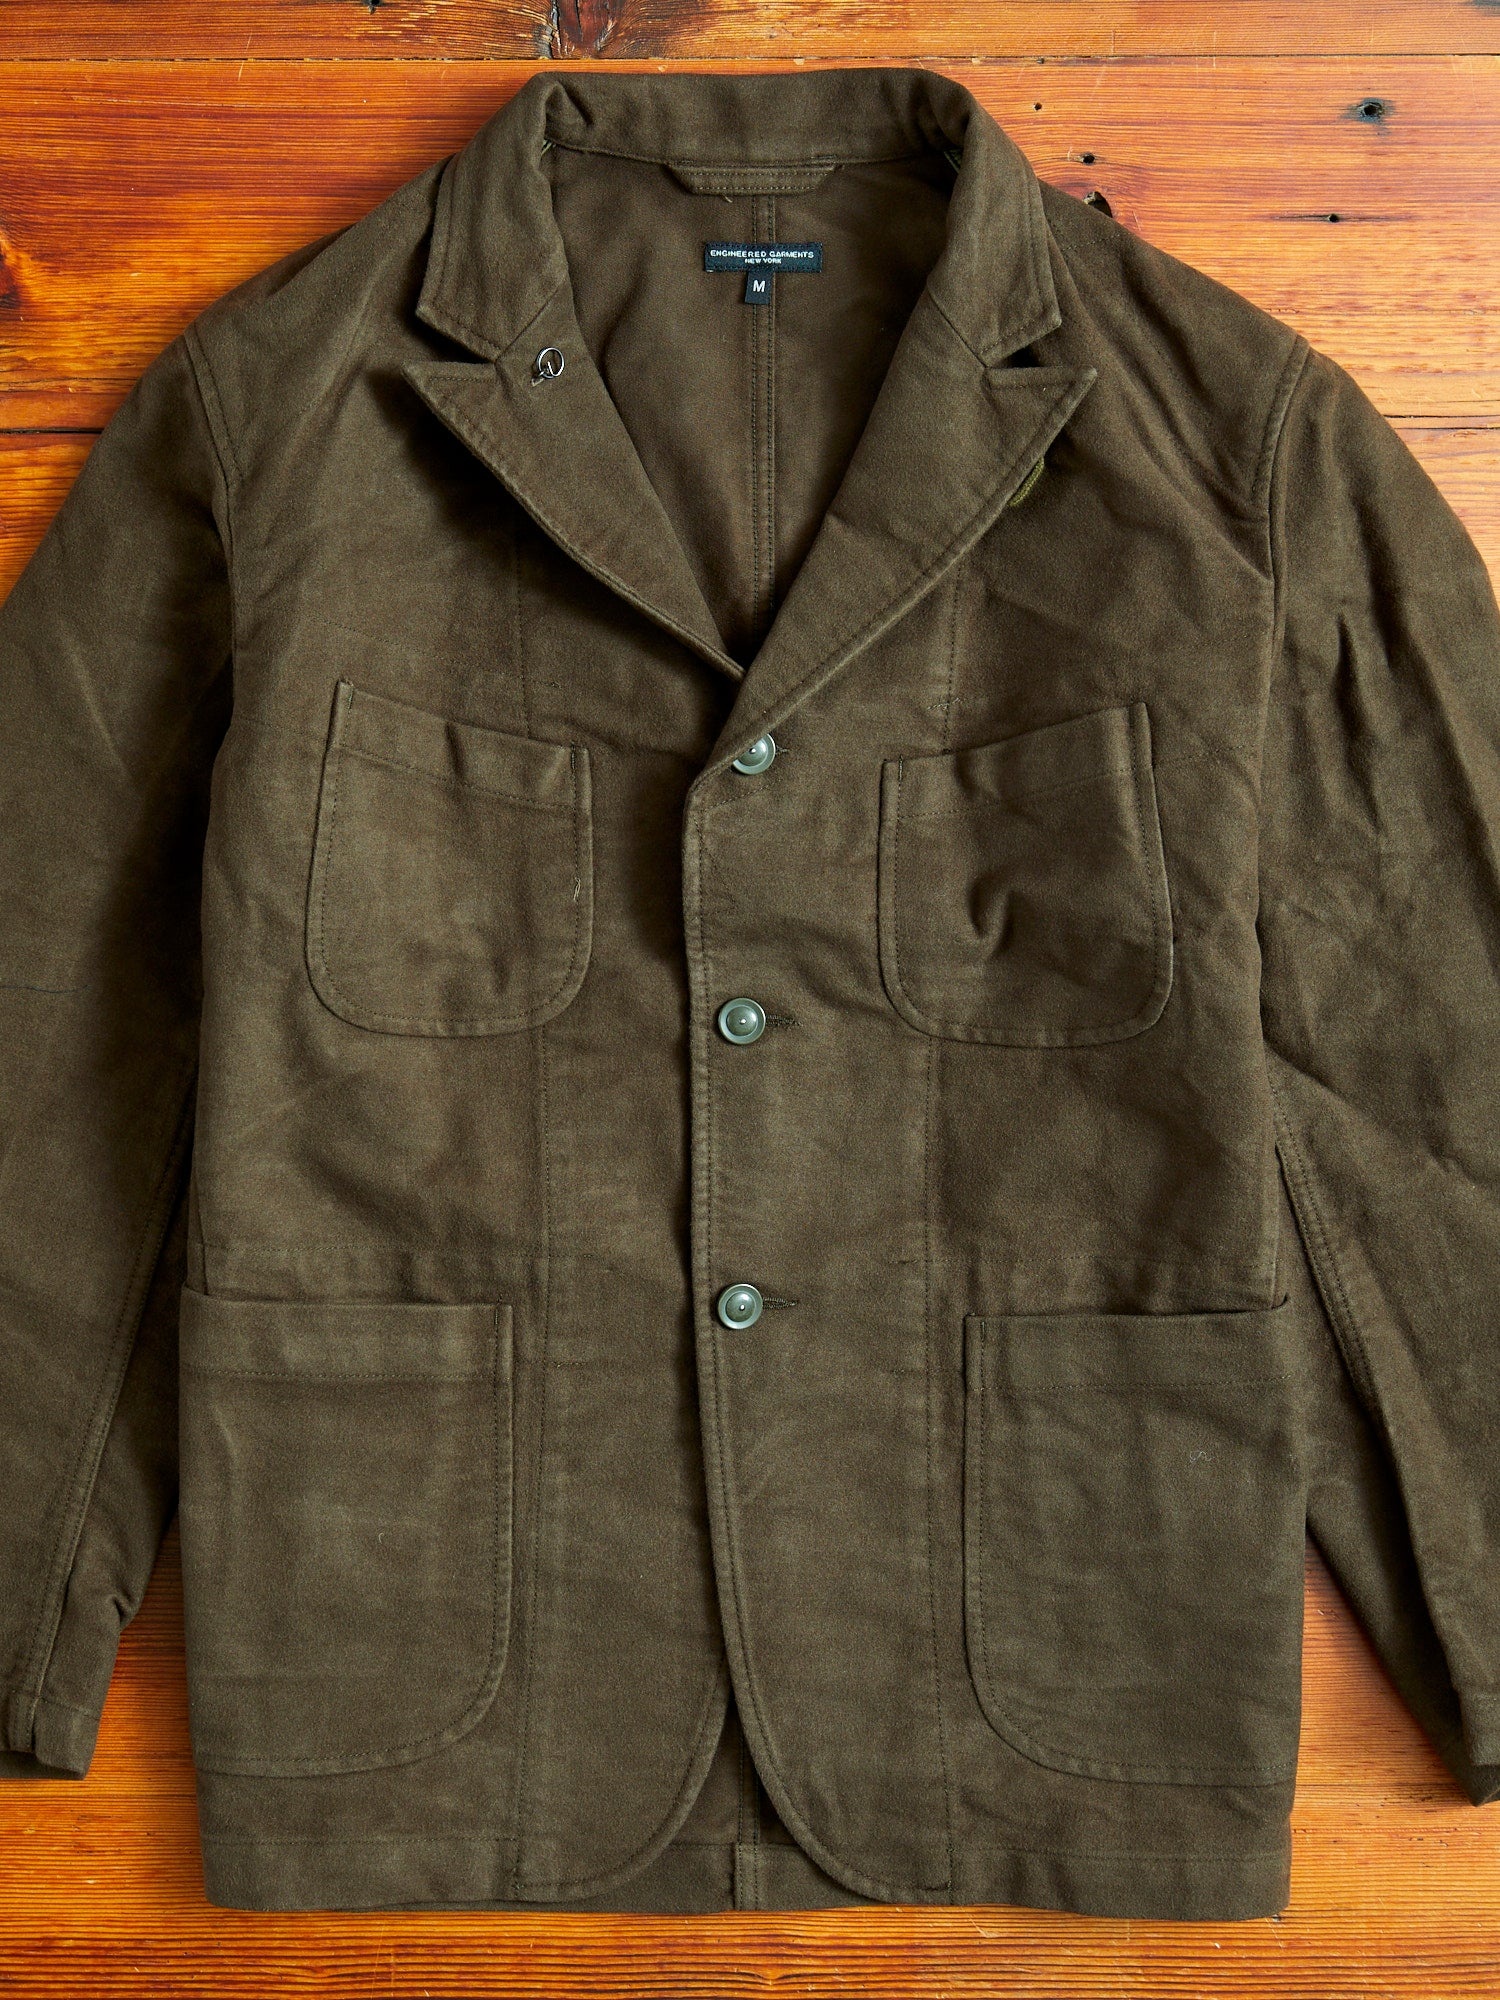 Engineered Garments Bedford Jacket in Olive Cotton Moleskin